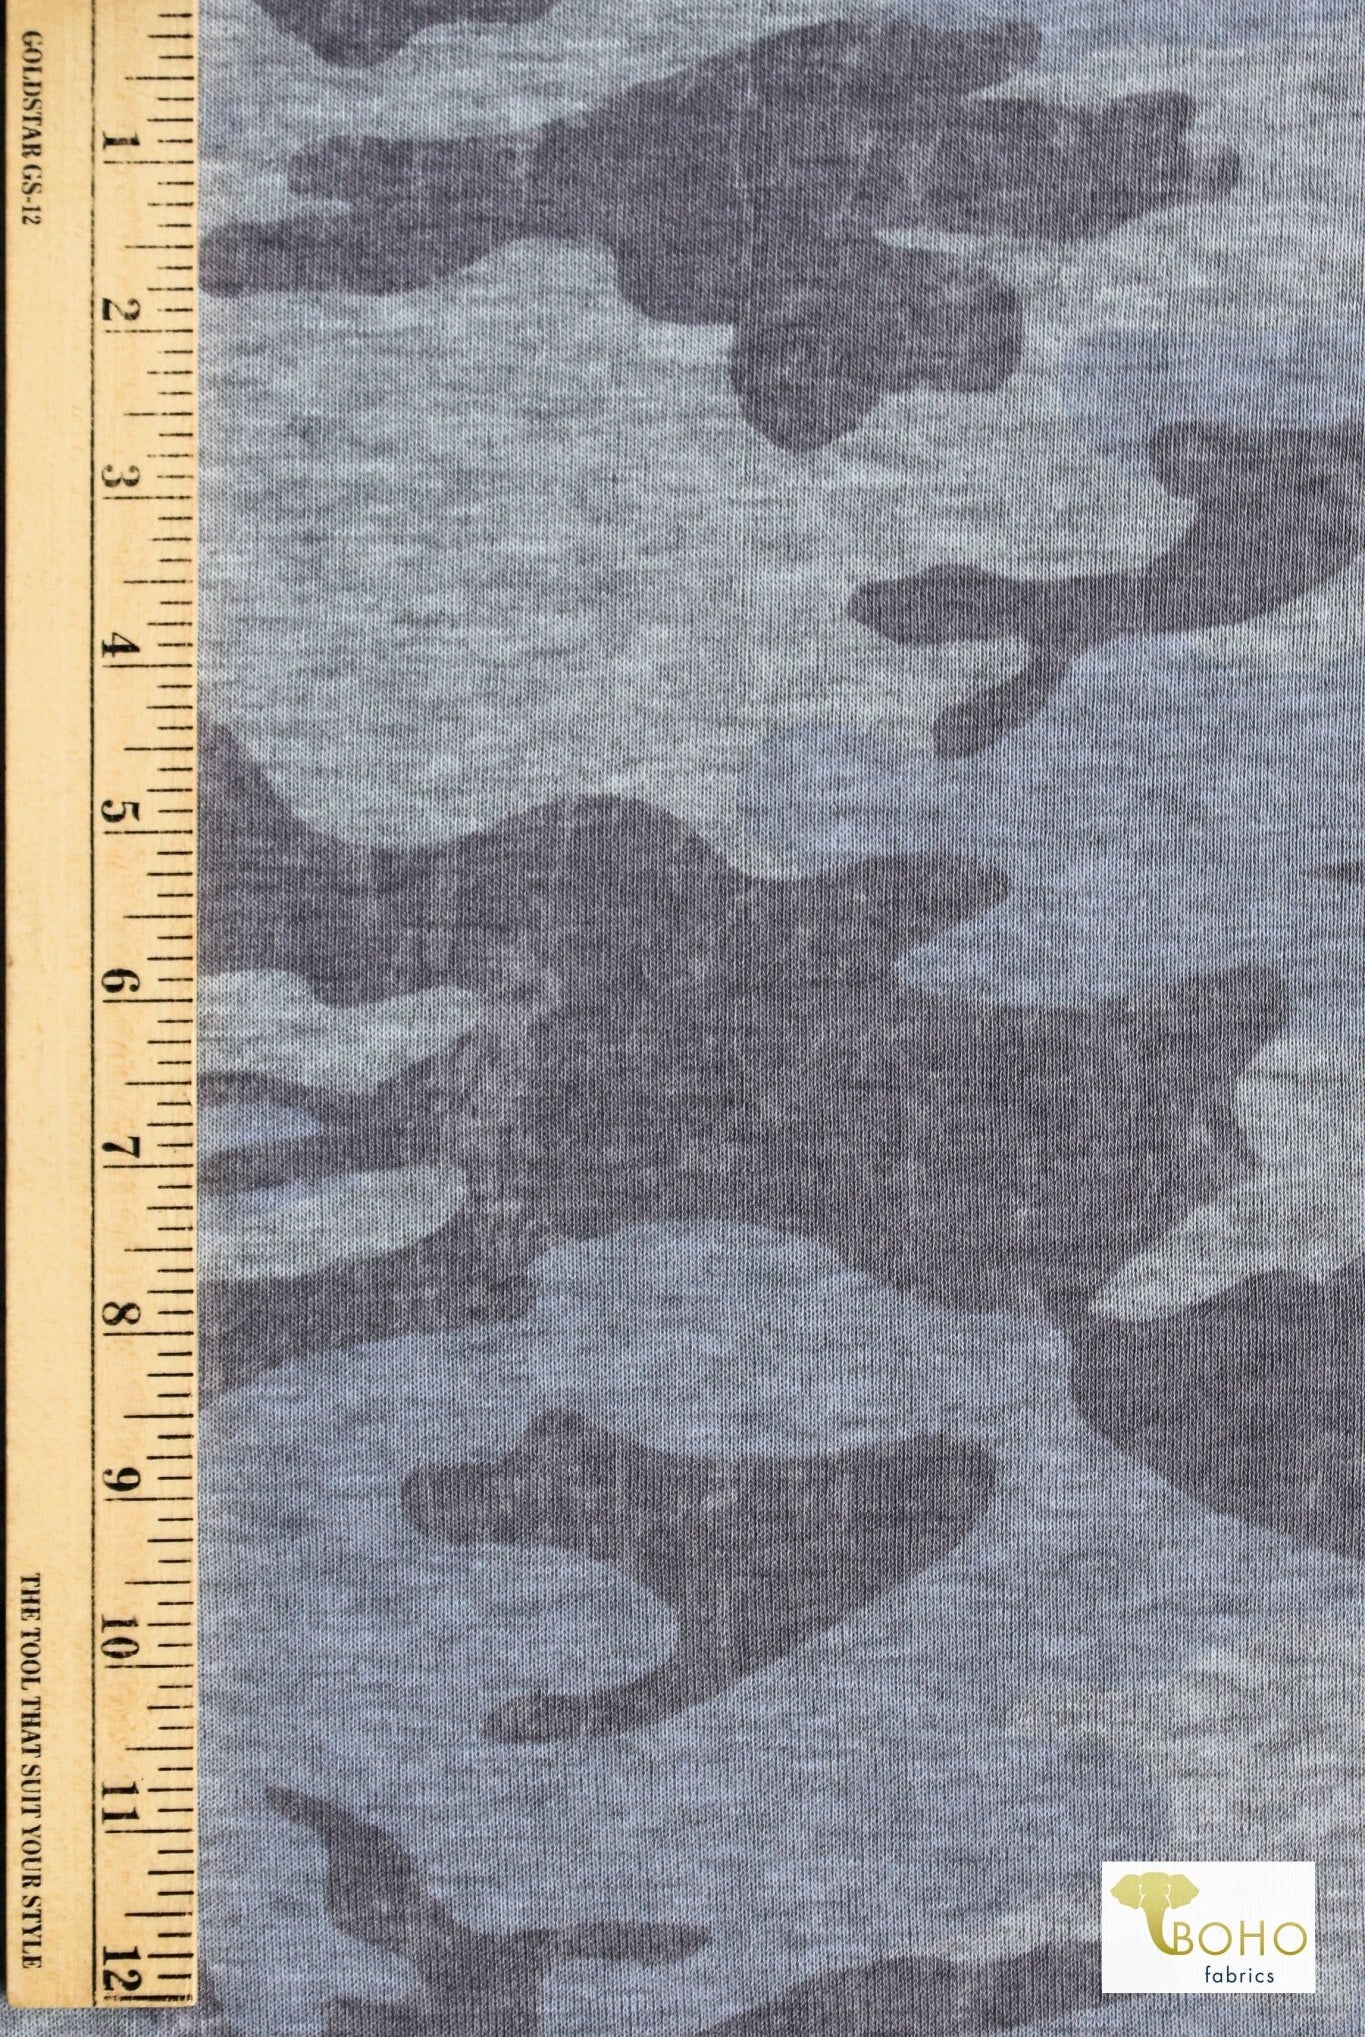 Ice Camo " Vintage Fleece", Brushed Sweater Print, Knit Fabric - Boho Fabrics